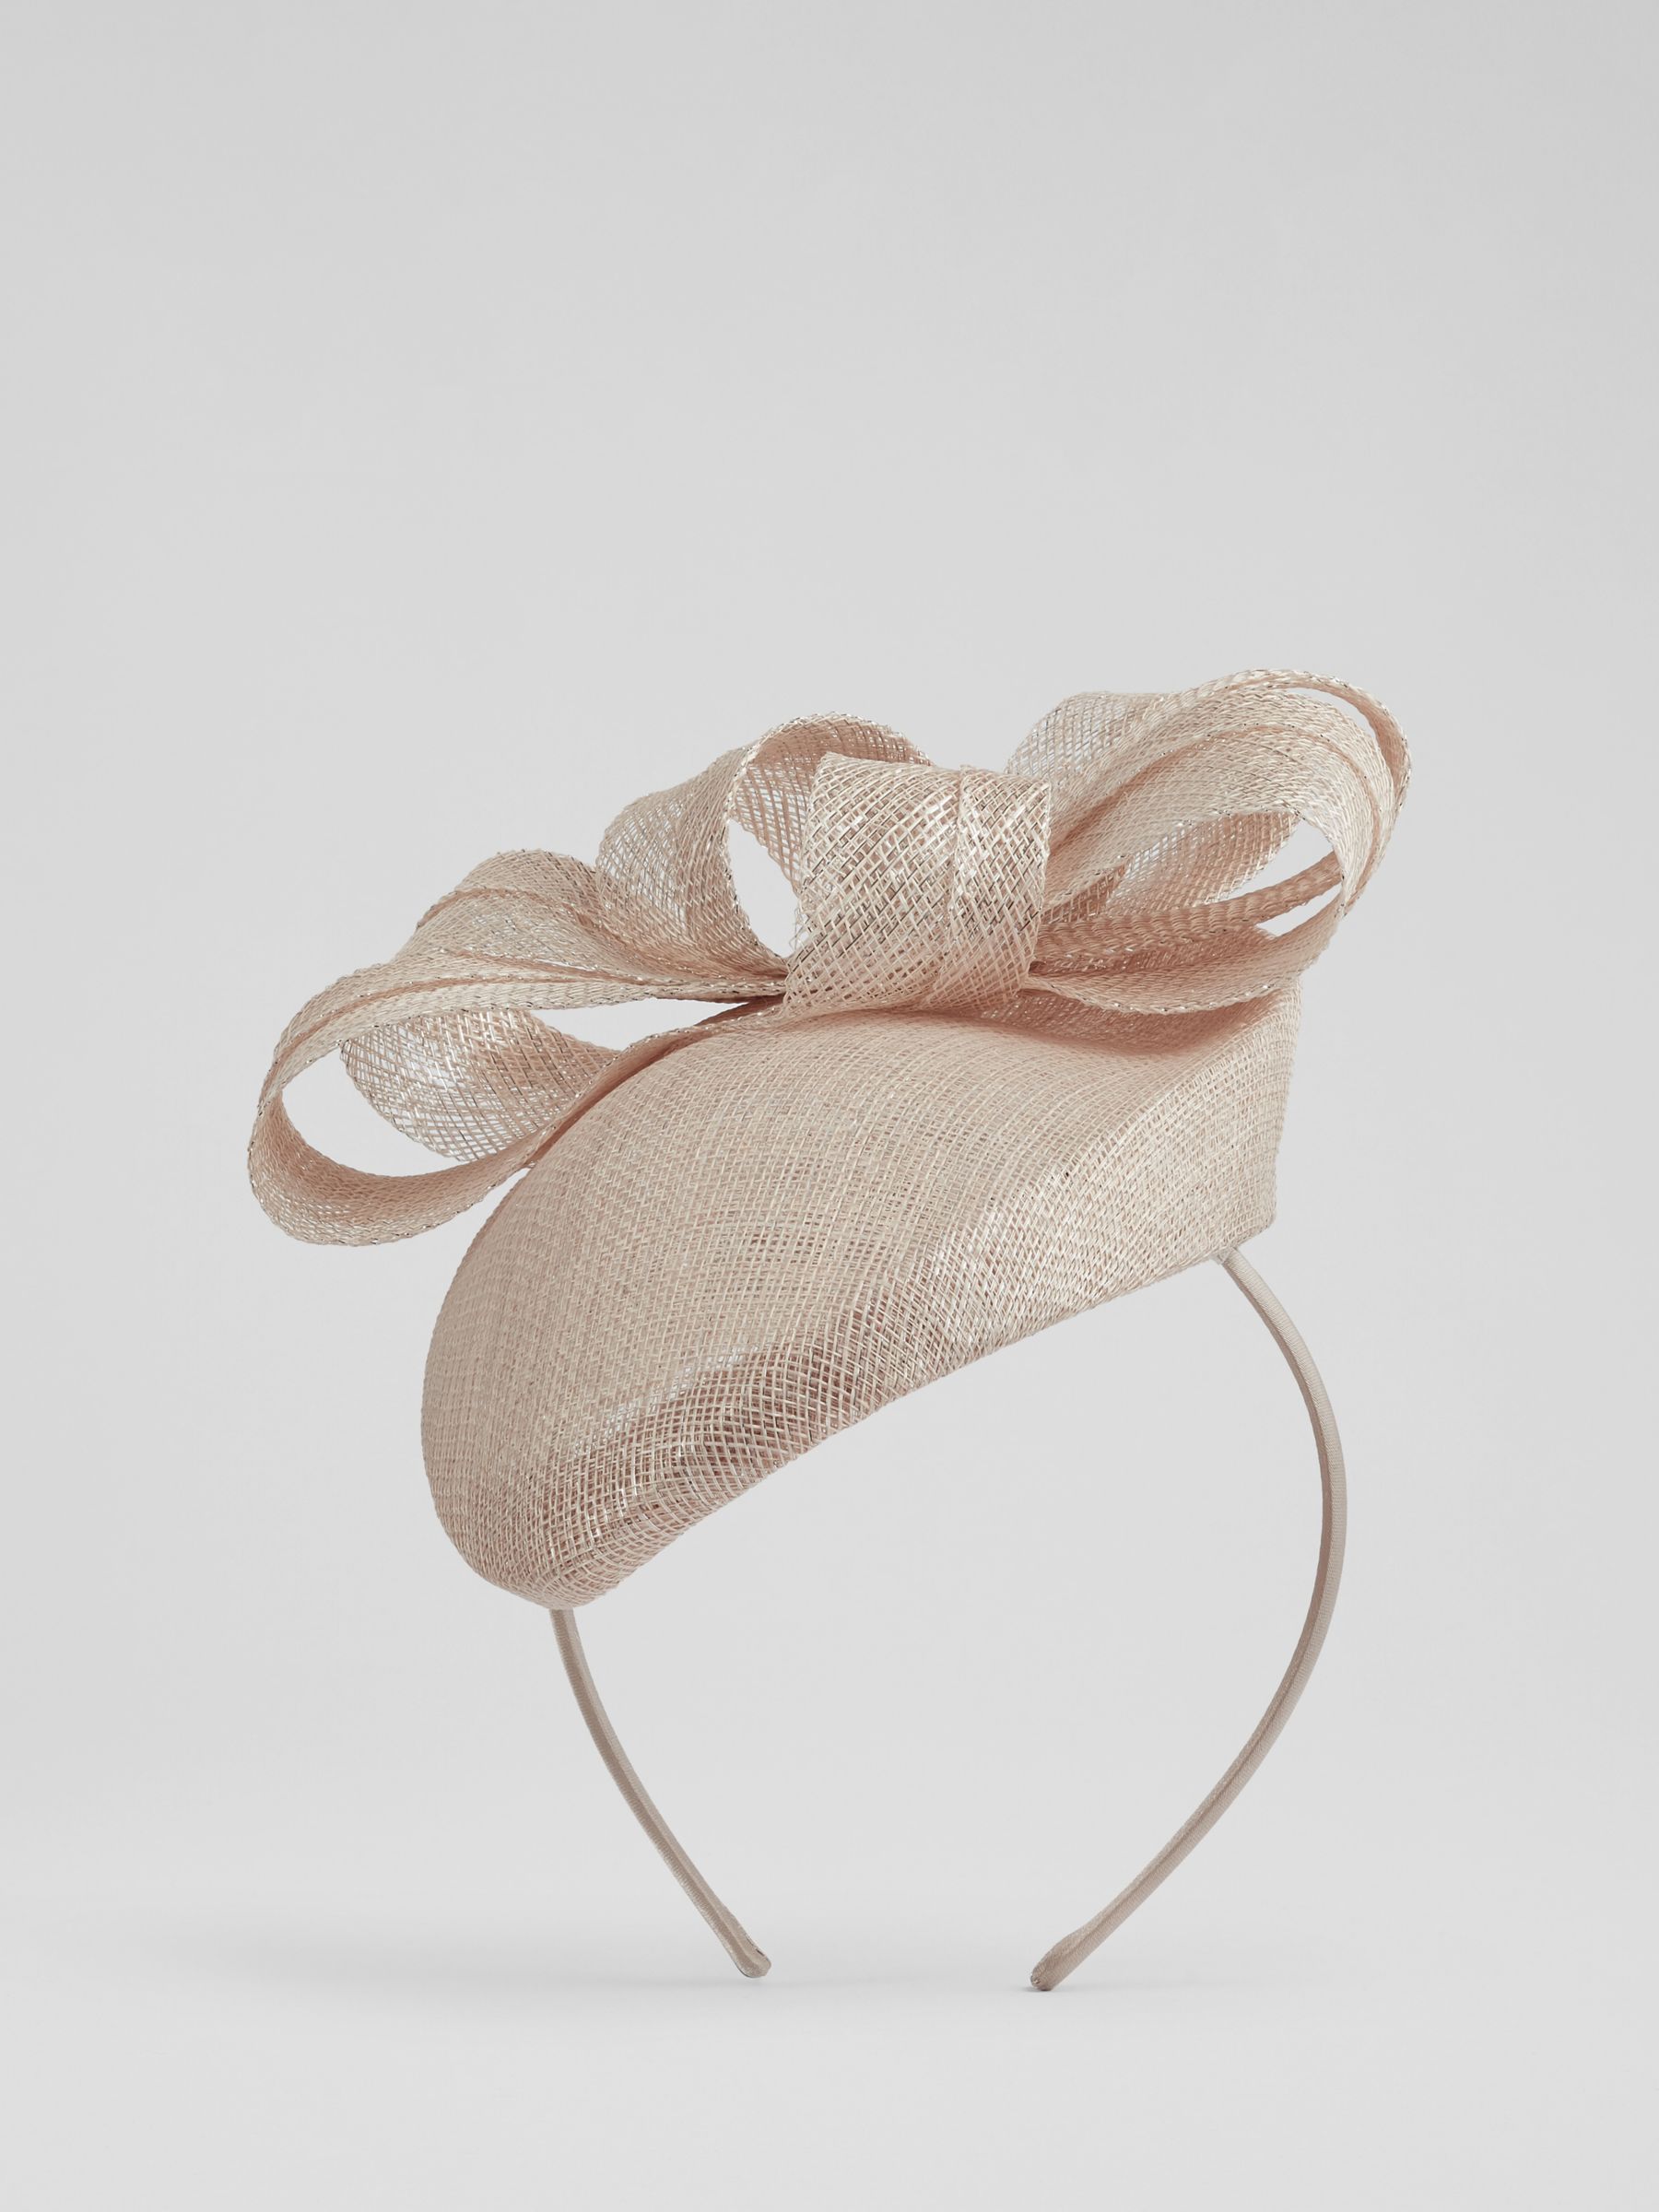 L.K.Bennett Elowen Bow Detail Hat Fascinator, Cream, One Size